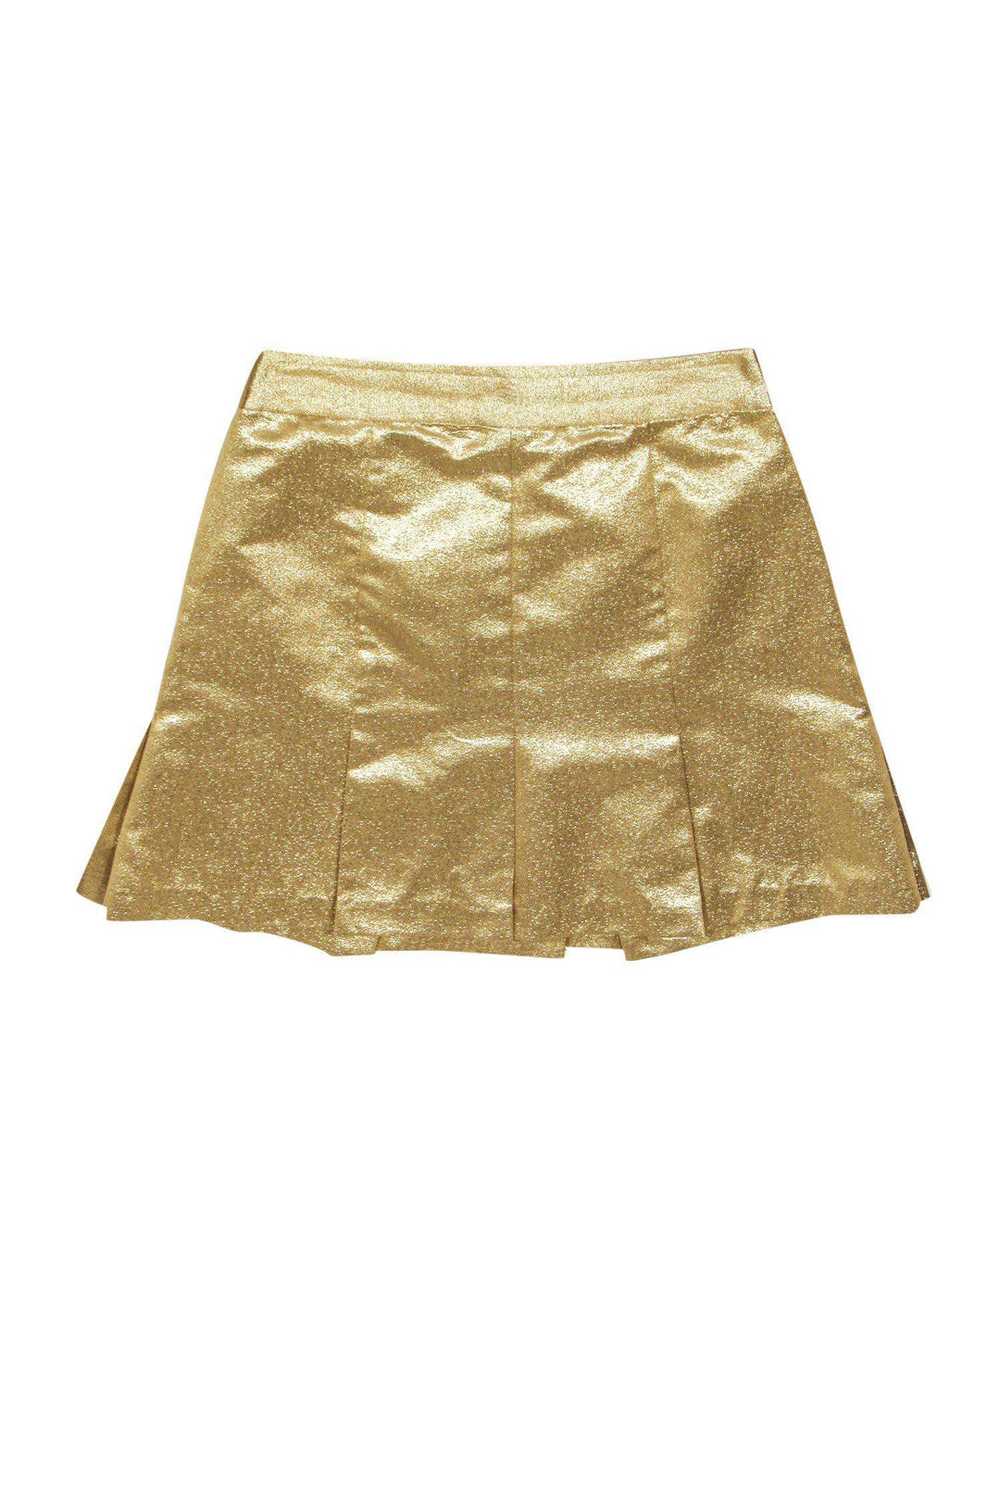 Nanette Lepore - Metallic Gold A-Line Skirt Sz 0 - image 1